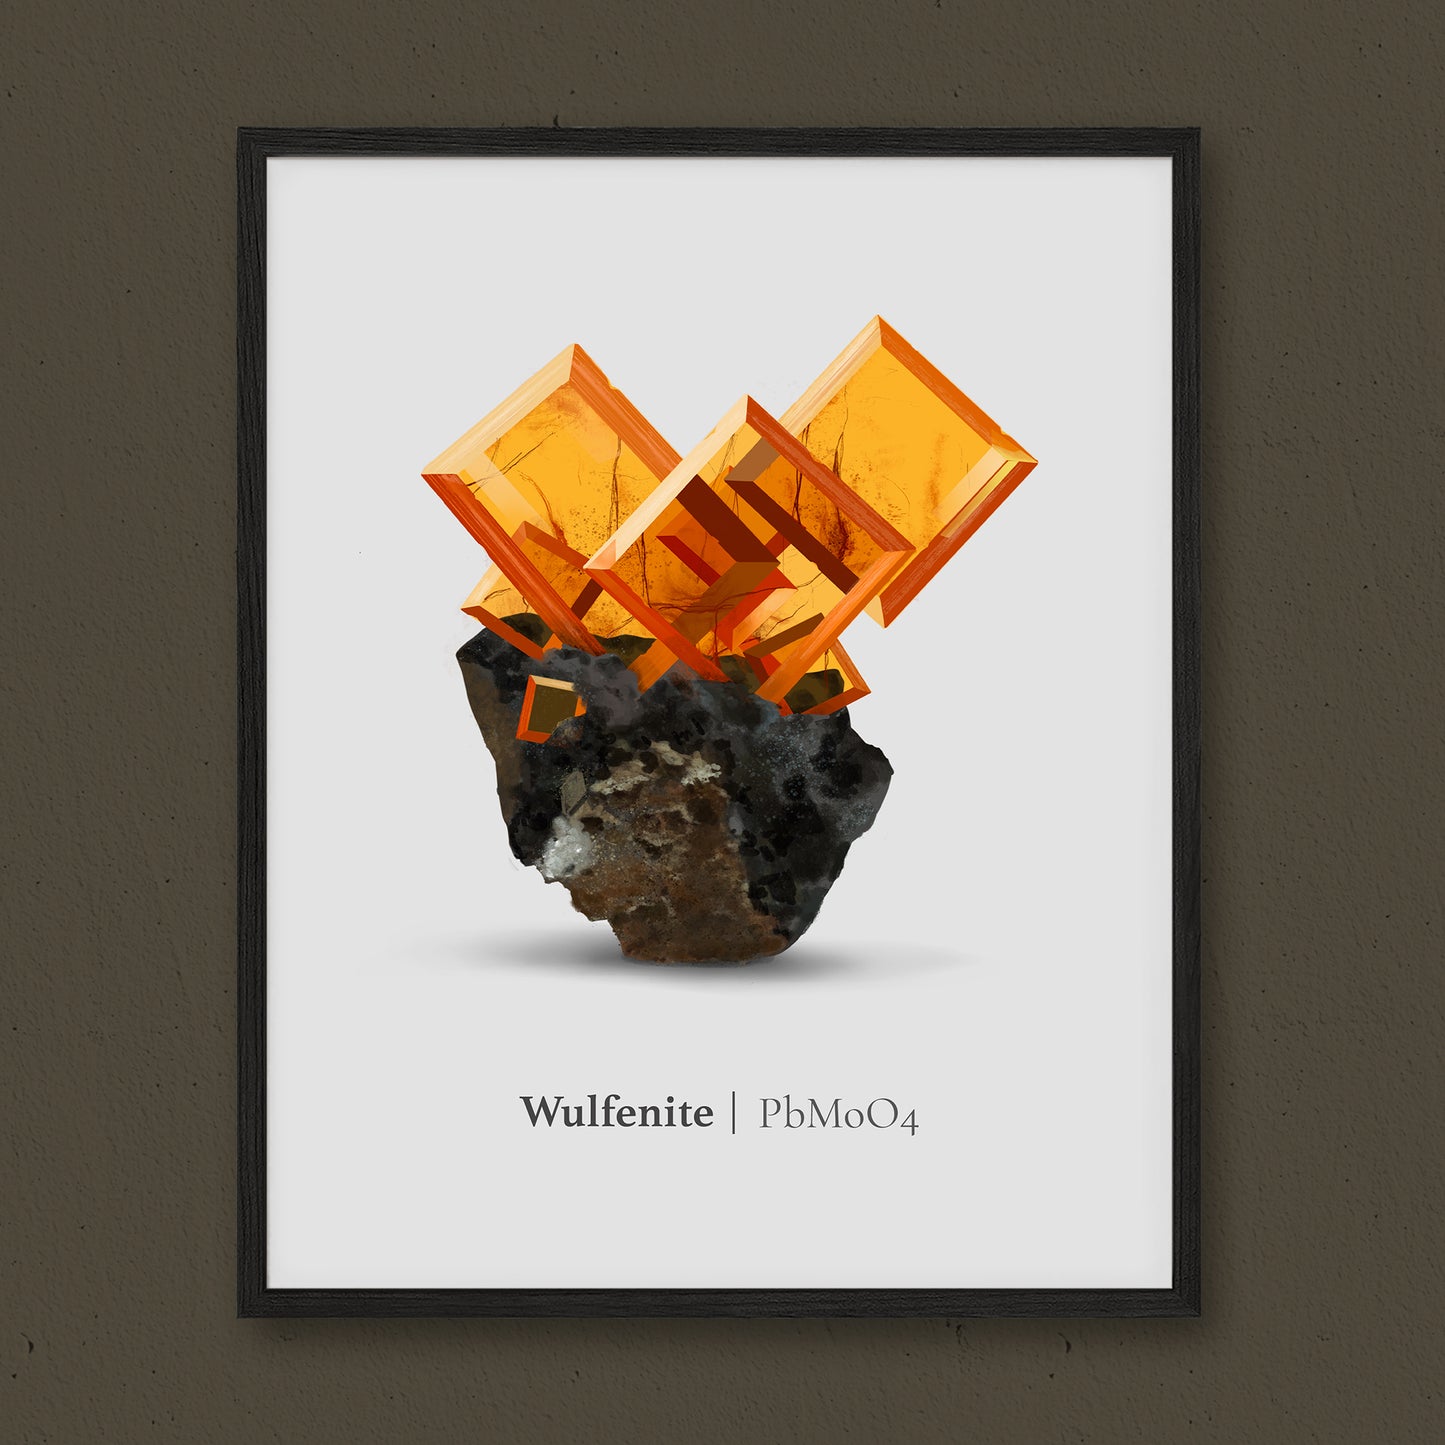 W- Wulfenite